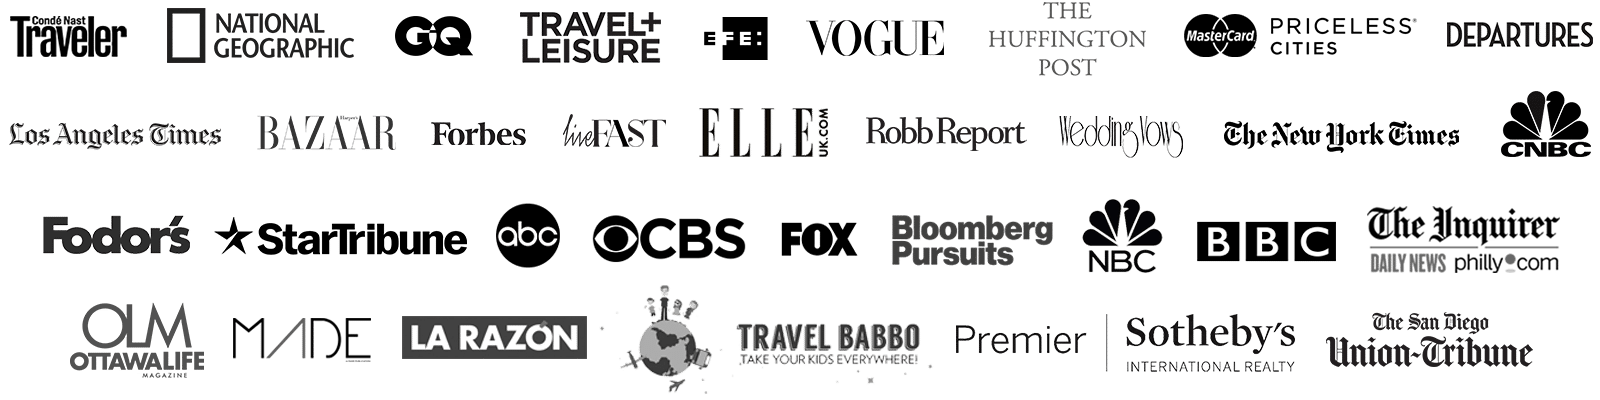 Branding Magazine & News Logos Featured Travel Atelier